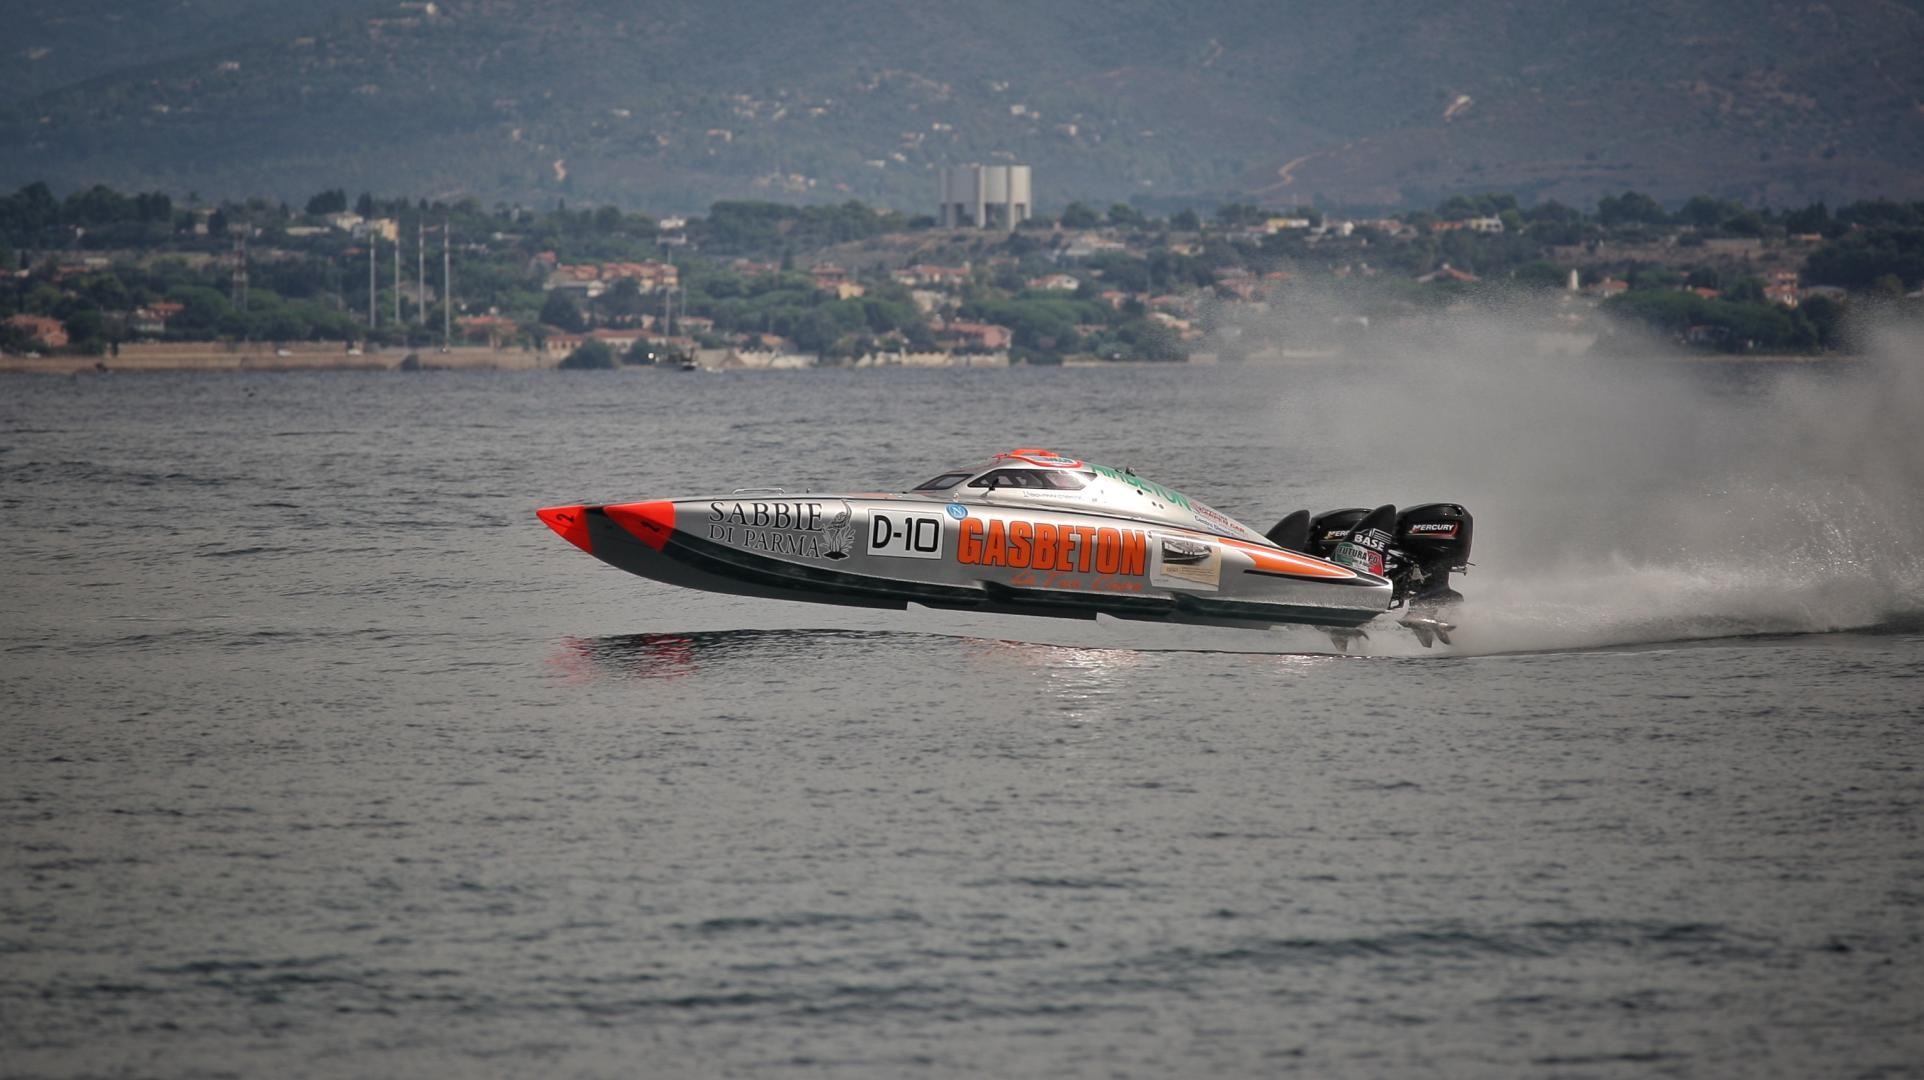 Sardinia Grand Prix, Gara-1 posticipata a venerdi mattina